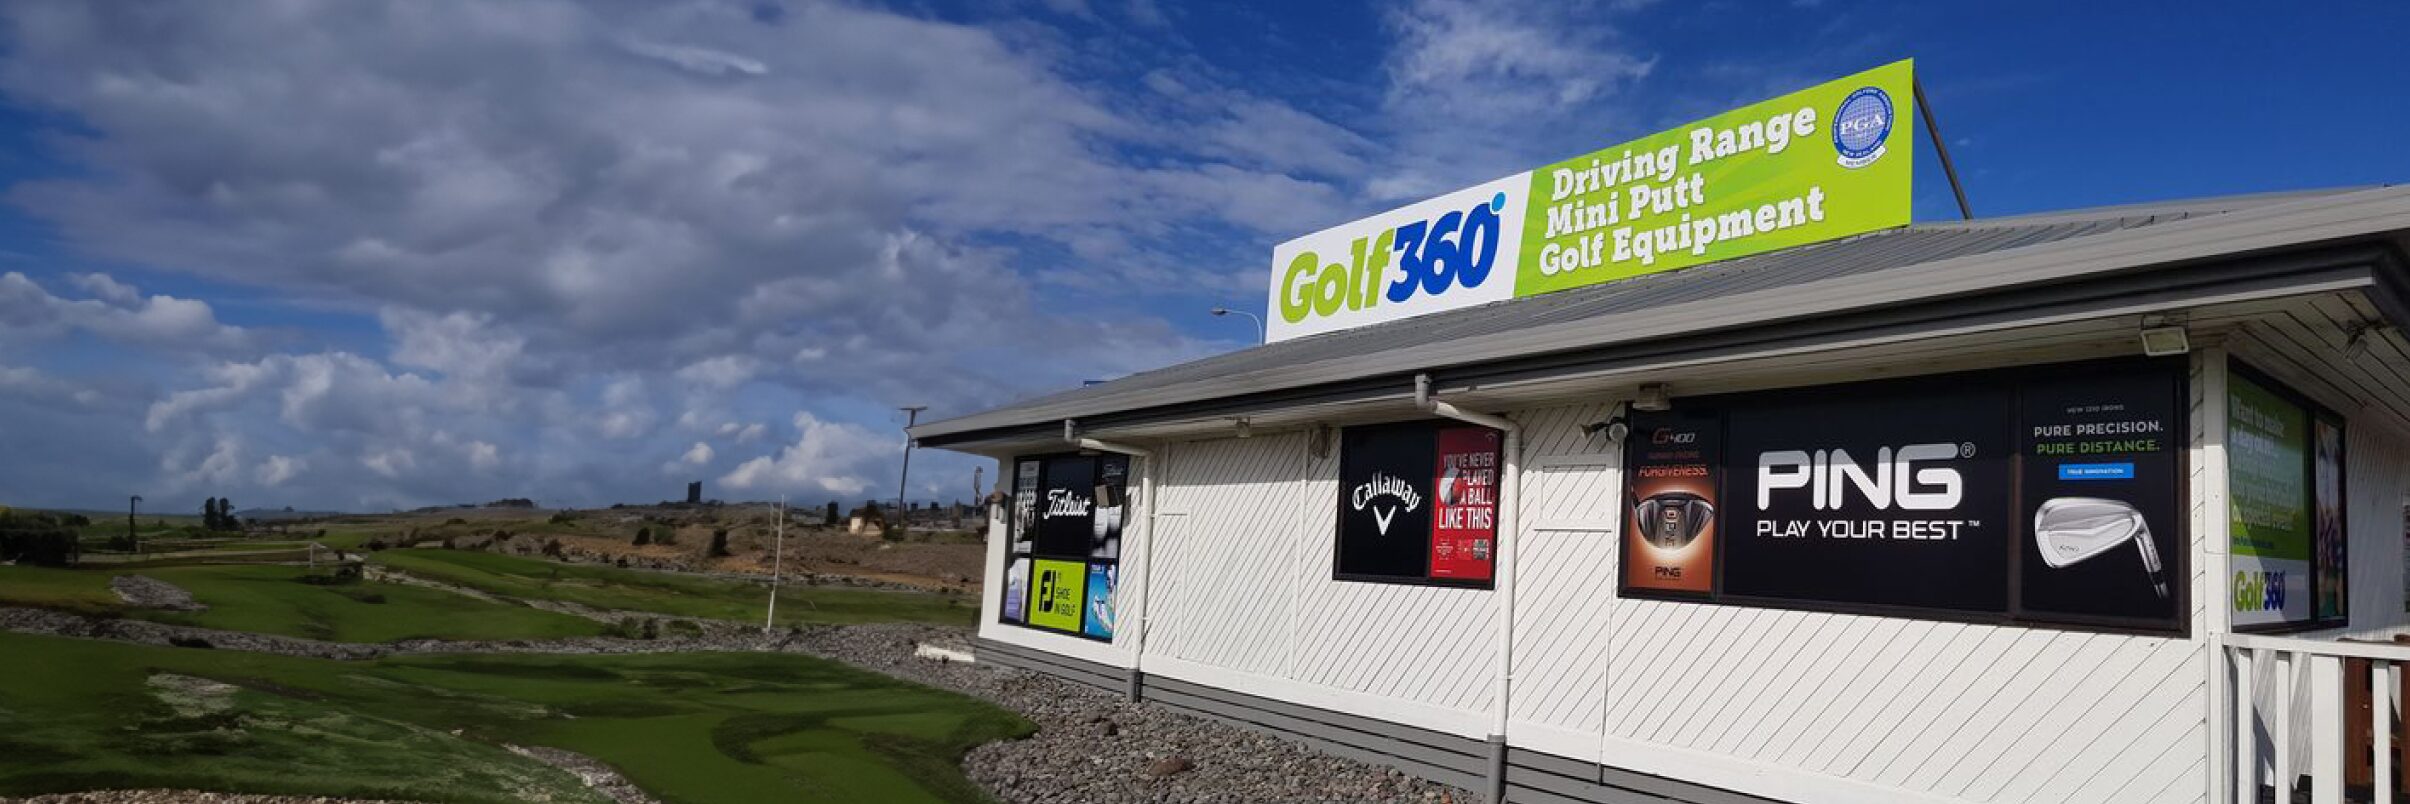 Golf 360's mini putt range next to the store building.